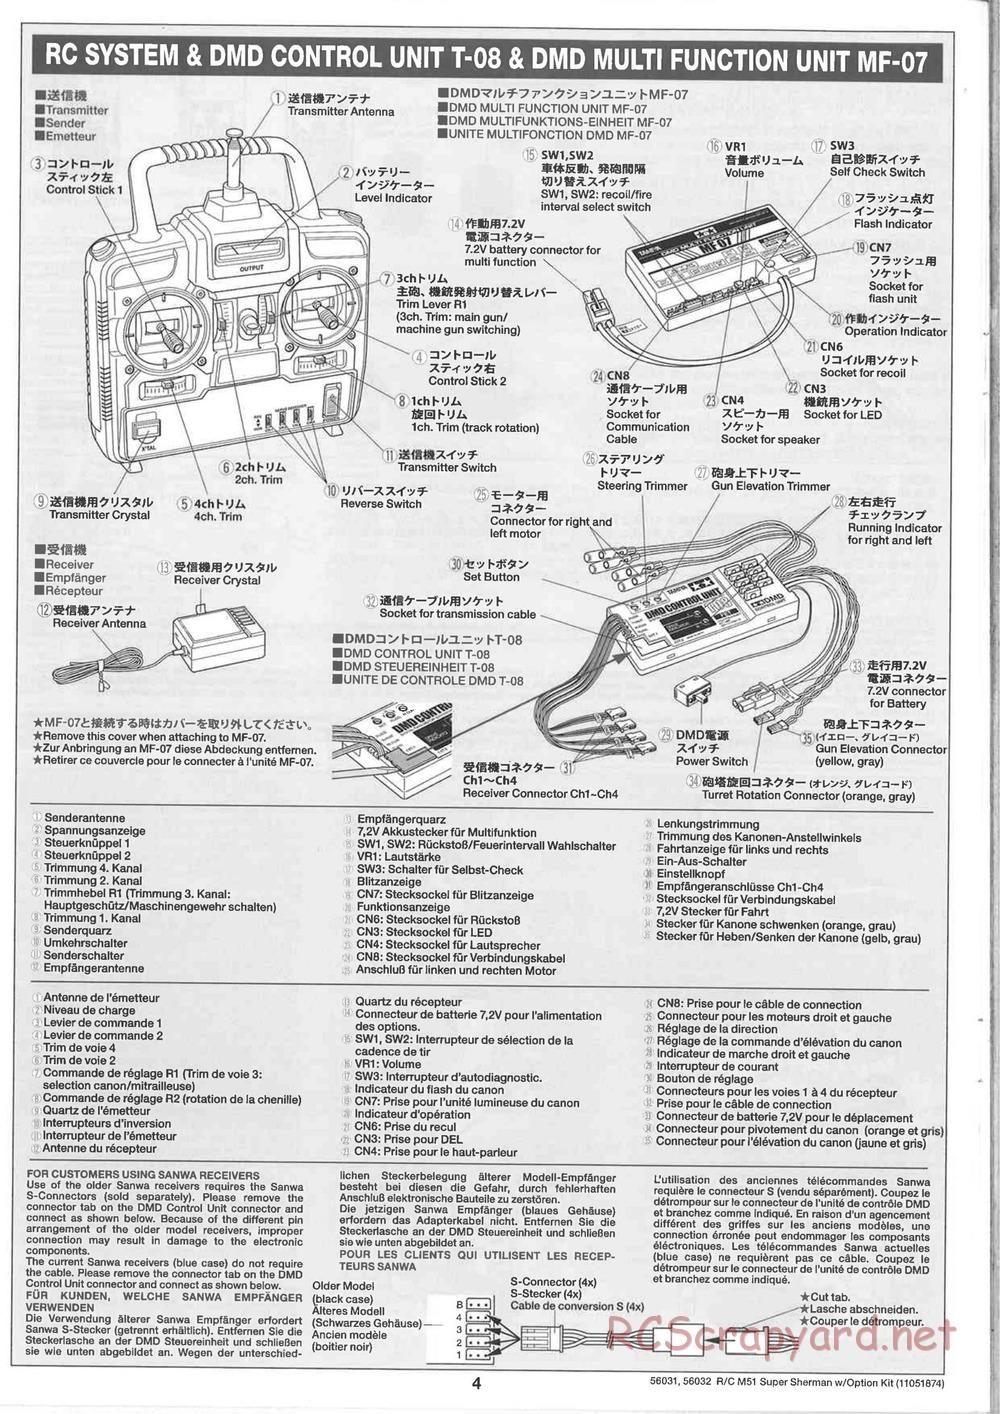 Tamiya - Super Sherman M-51 - 1/16 Scale Chassis - Manual - Page 4